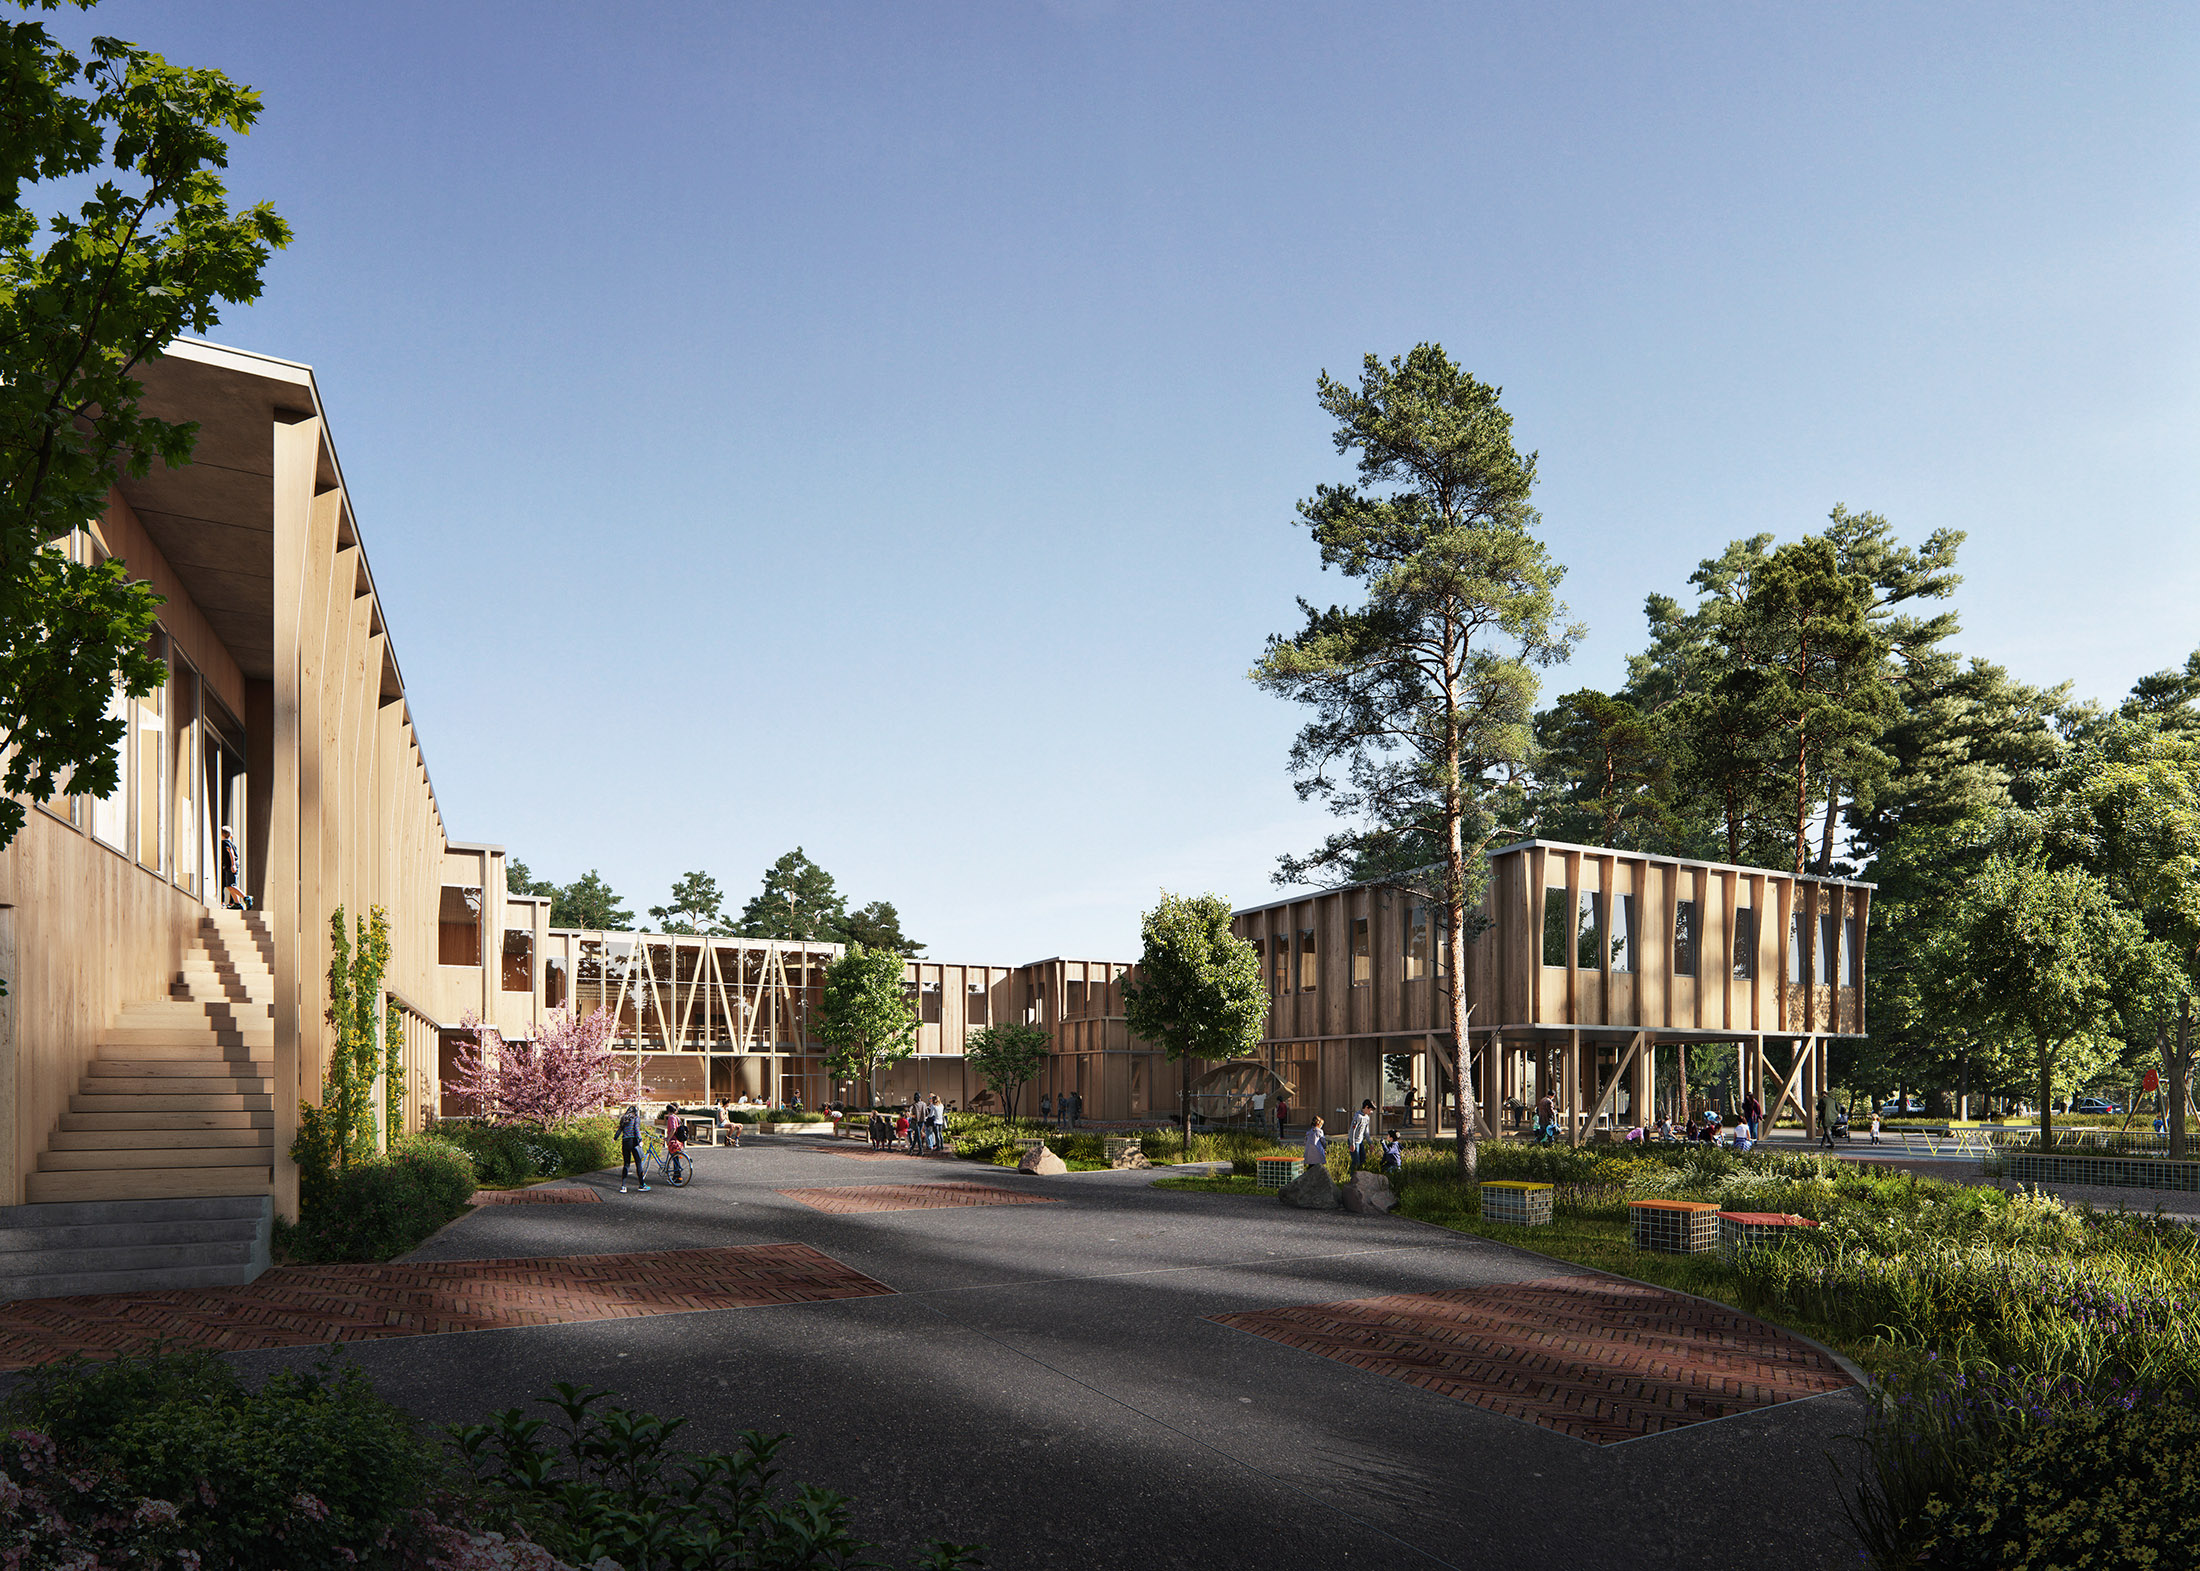 Ola Roald, Aursmoen School, Norway, 2021